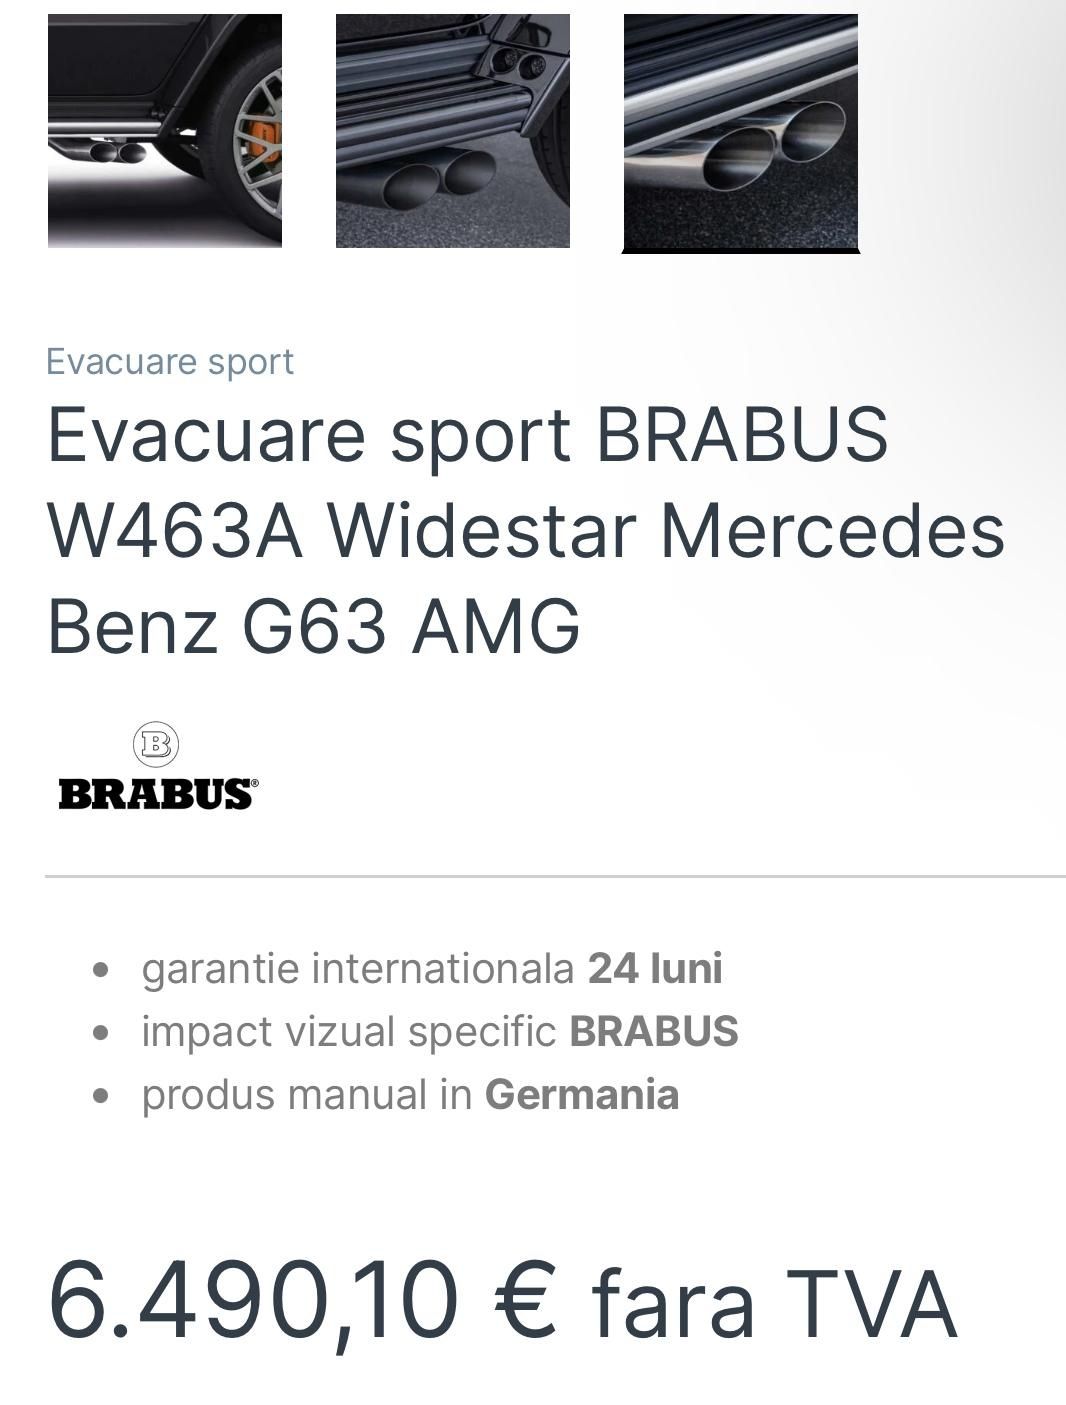 Evacuare sport BRABUS W463A Widestar Mercedes Benz G63 AMG